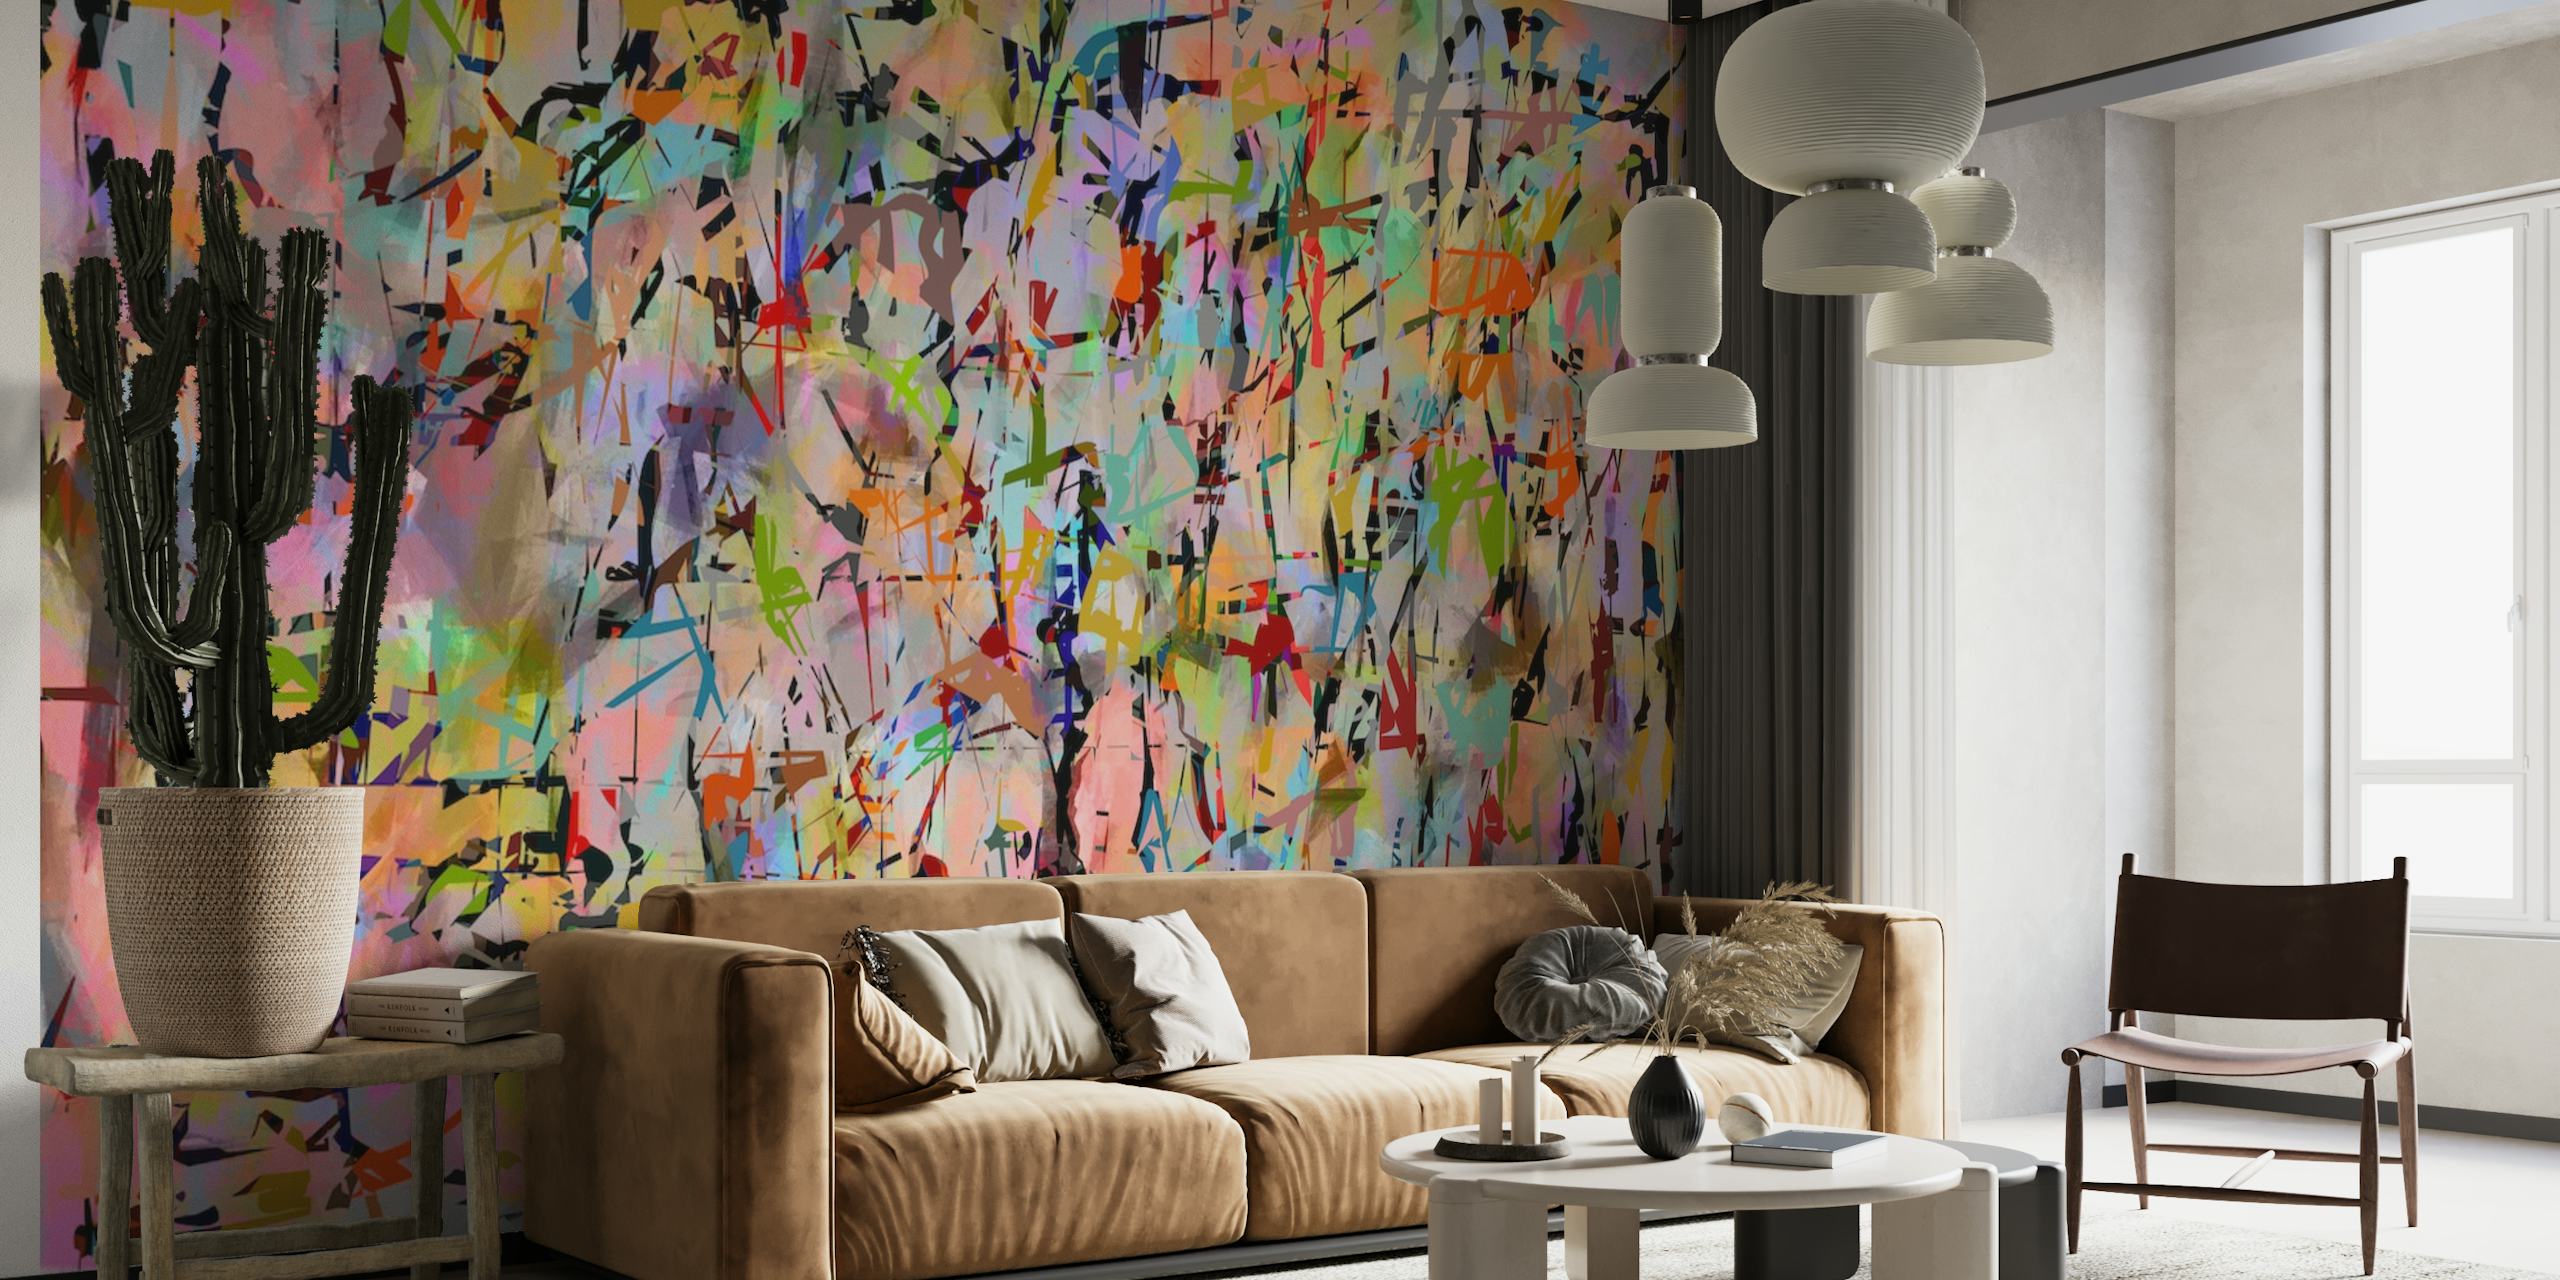 Pollock de inspiração expressionista abstrata - Gateway 4In mural de parede com toques vibrantes de cores